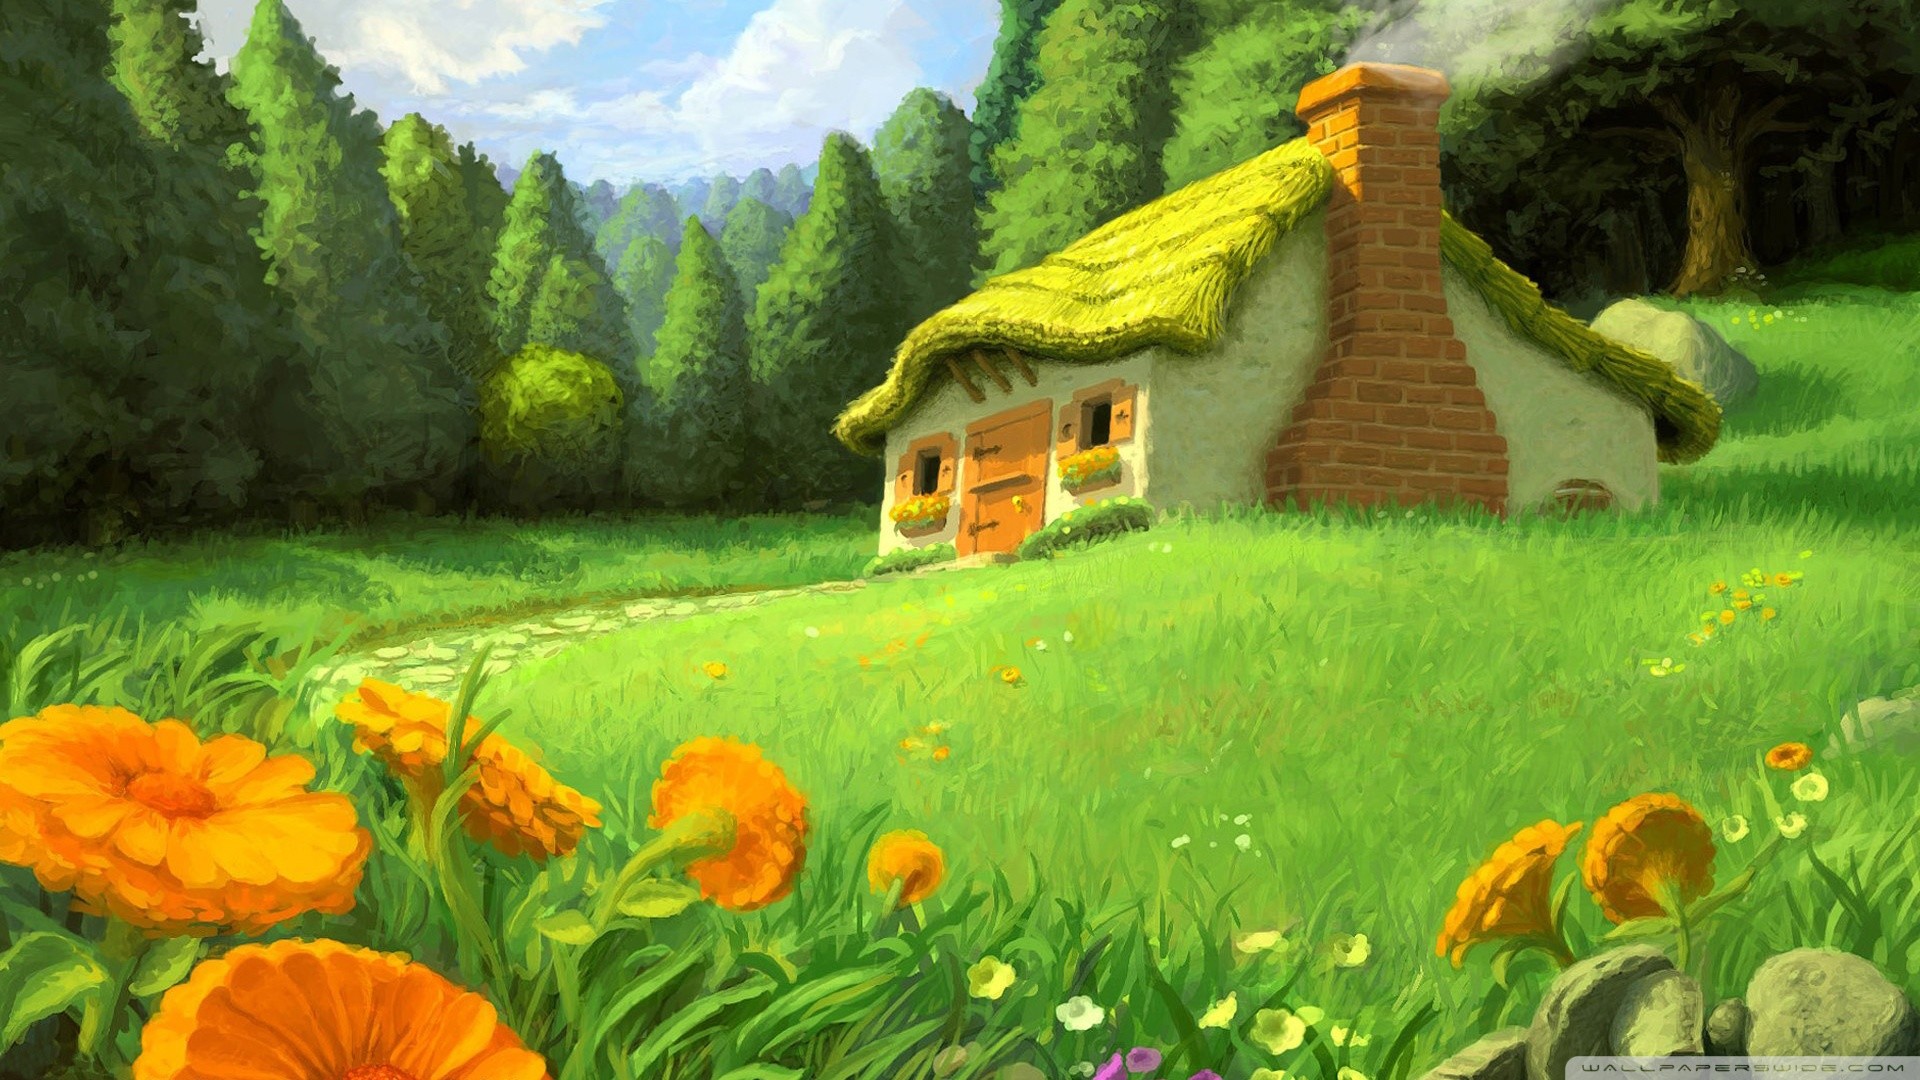 1920x1080 Fantasy Landscape Full HD Desktop Wallpaper.